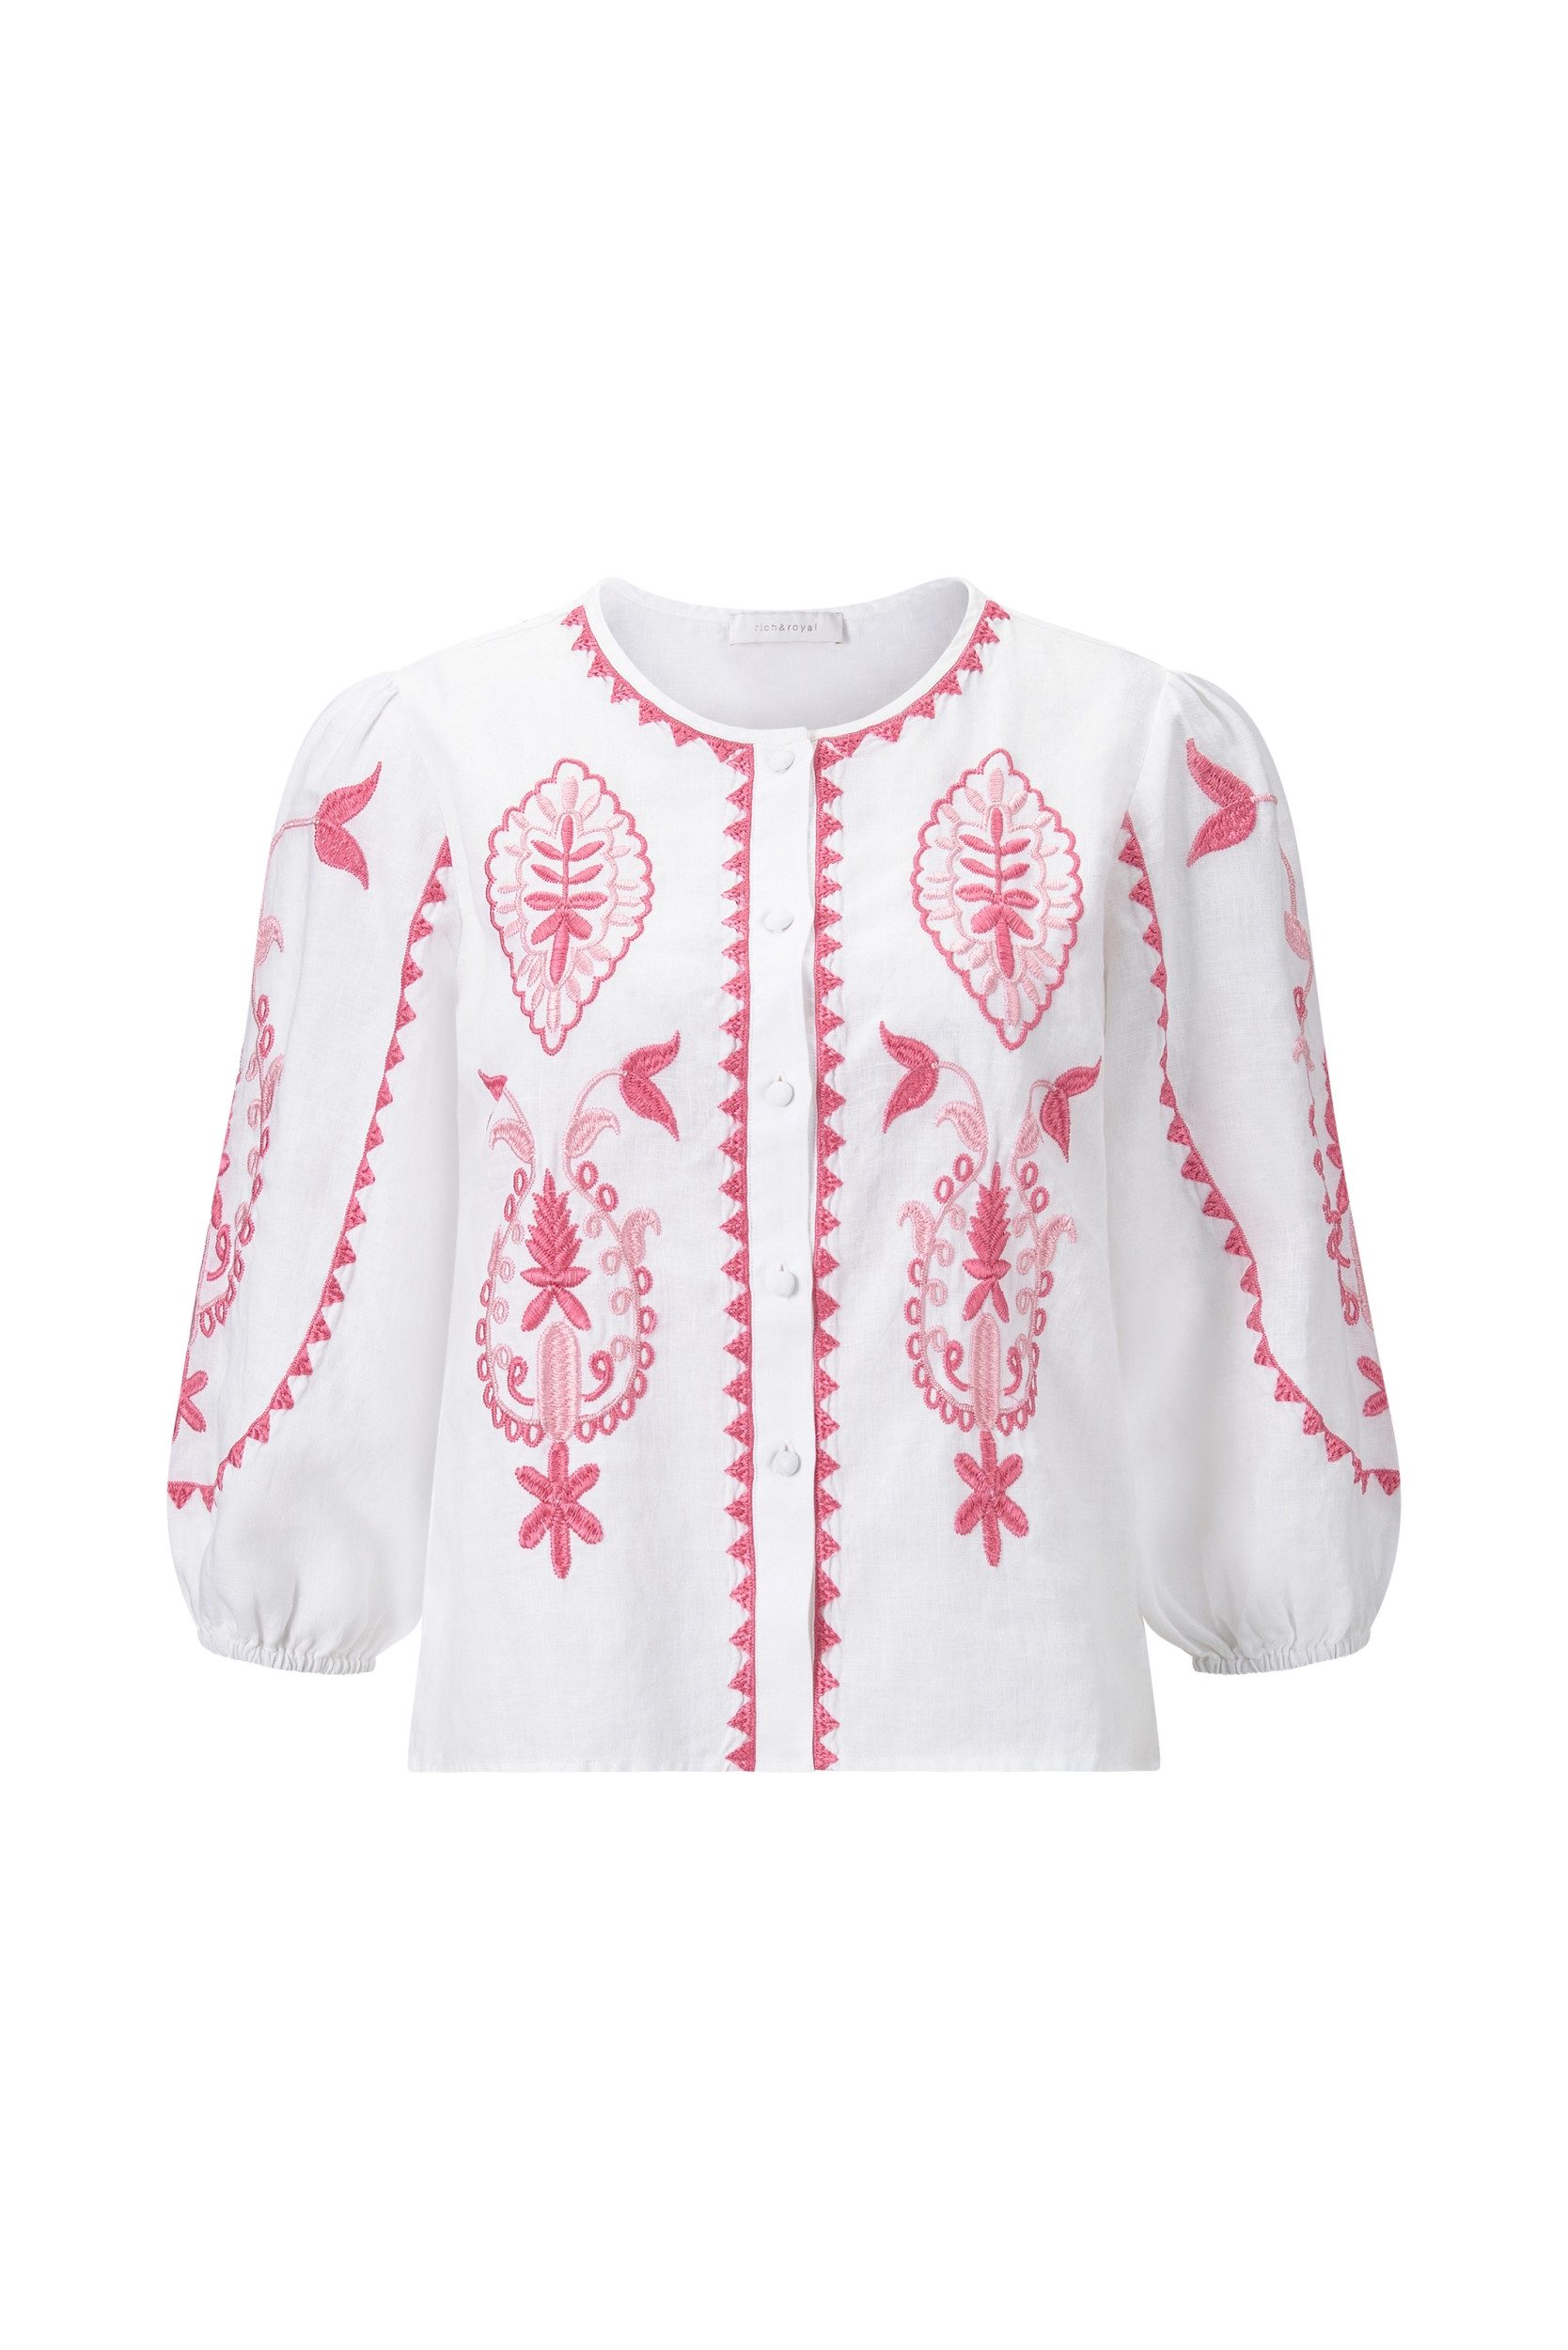 Rich & Royal Klassische Bluse embroidery blouse